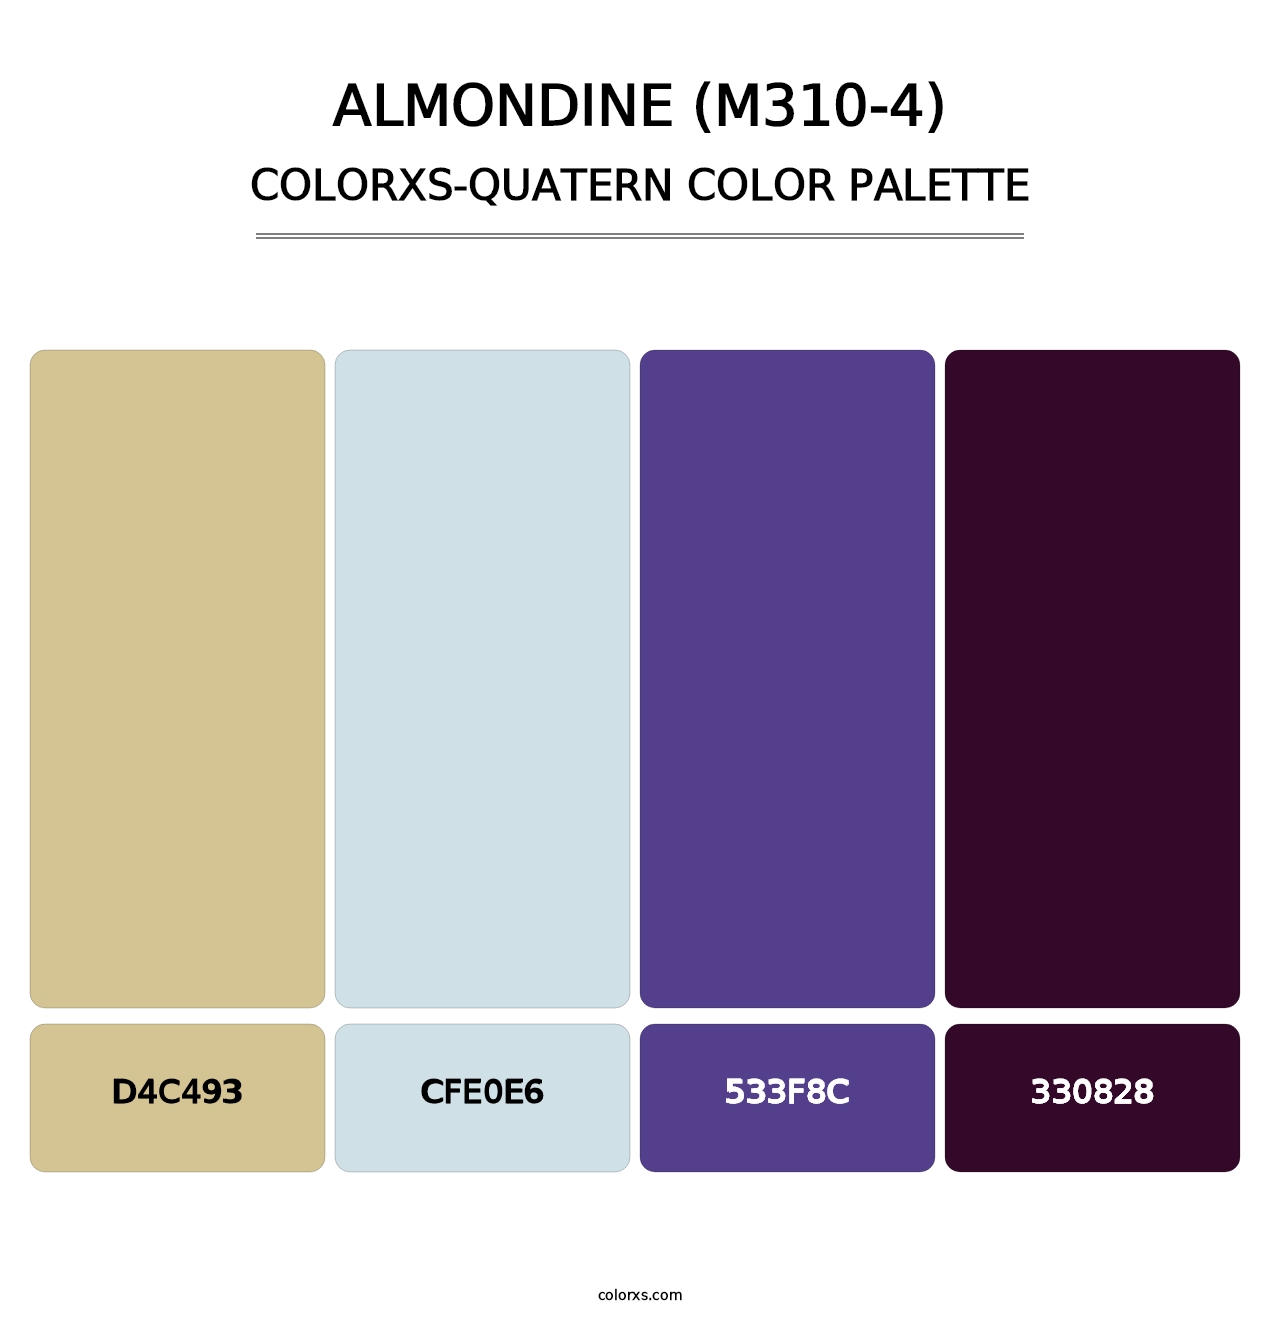 Almondine (M310-4) - Colorxs Quatern Palette